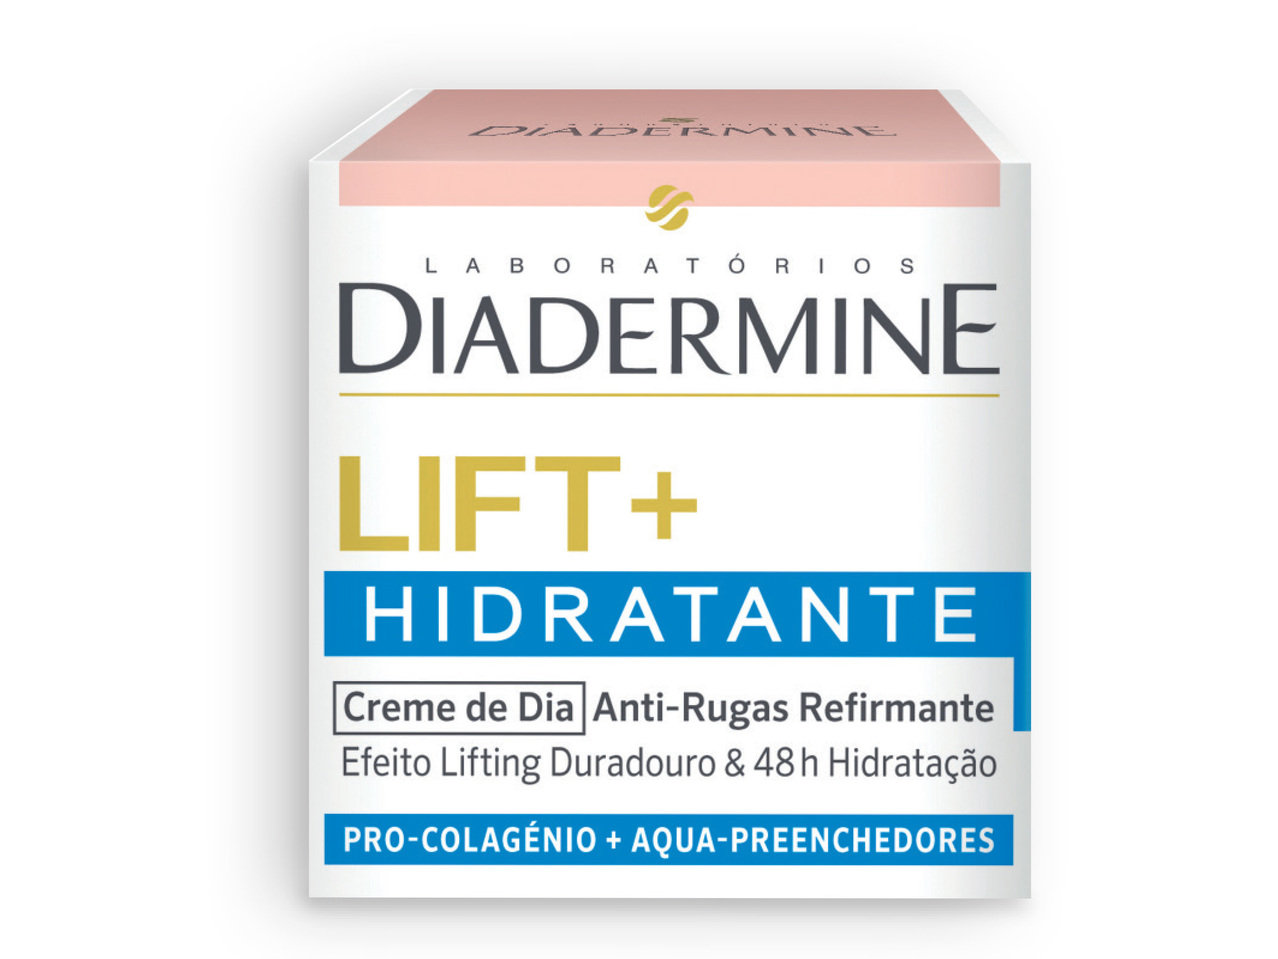 DIADERMINE(R) Lift Hidratante